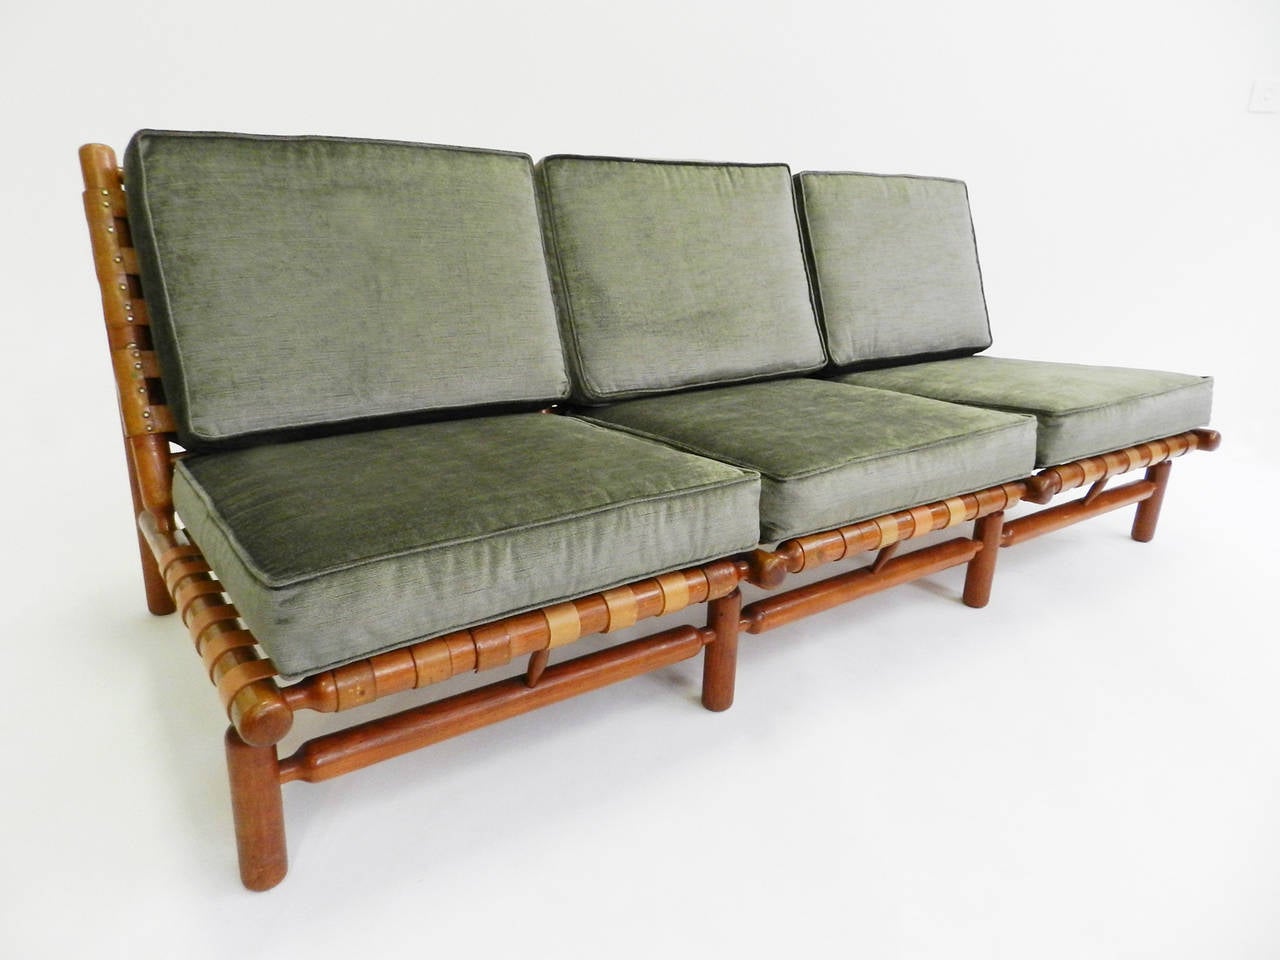 Leather Rare 1957 Tapiovaara Lounge Chair by Esposizione La Permanente Mobili